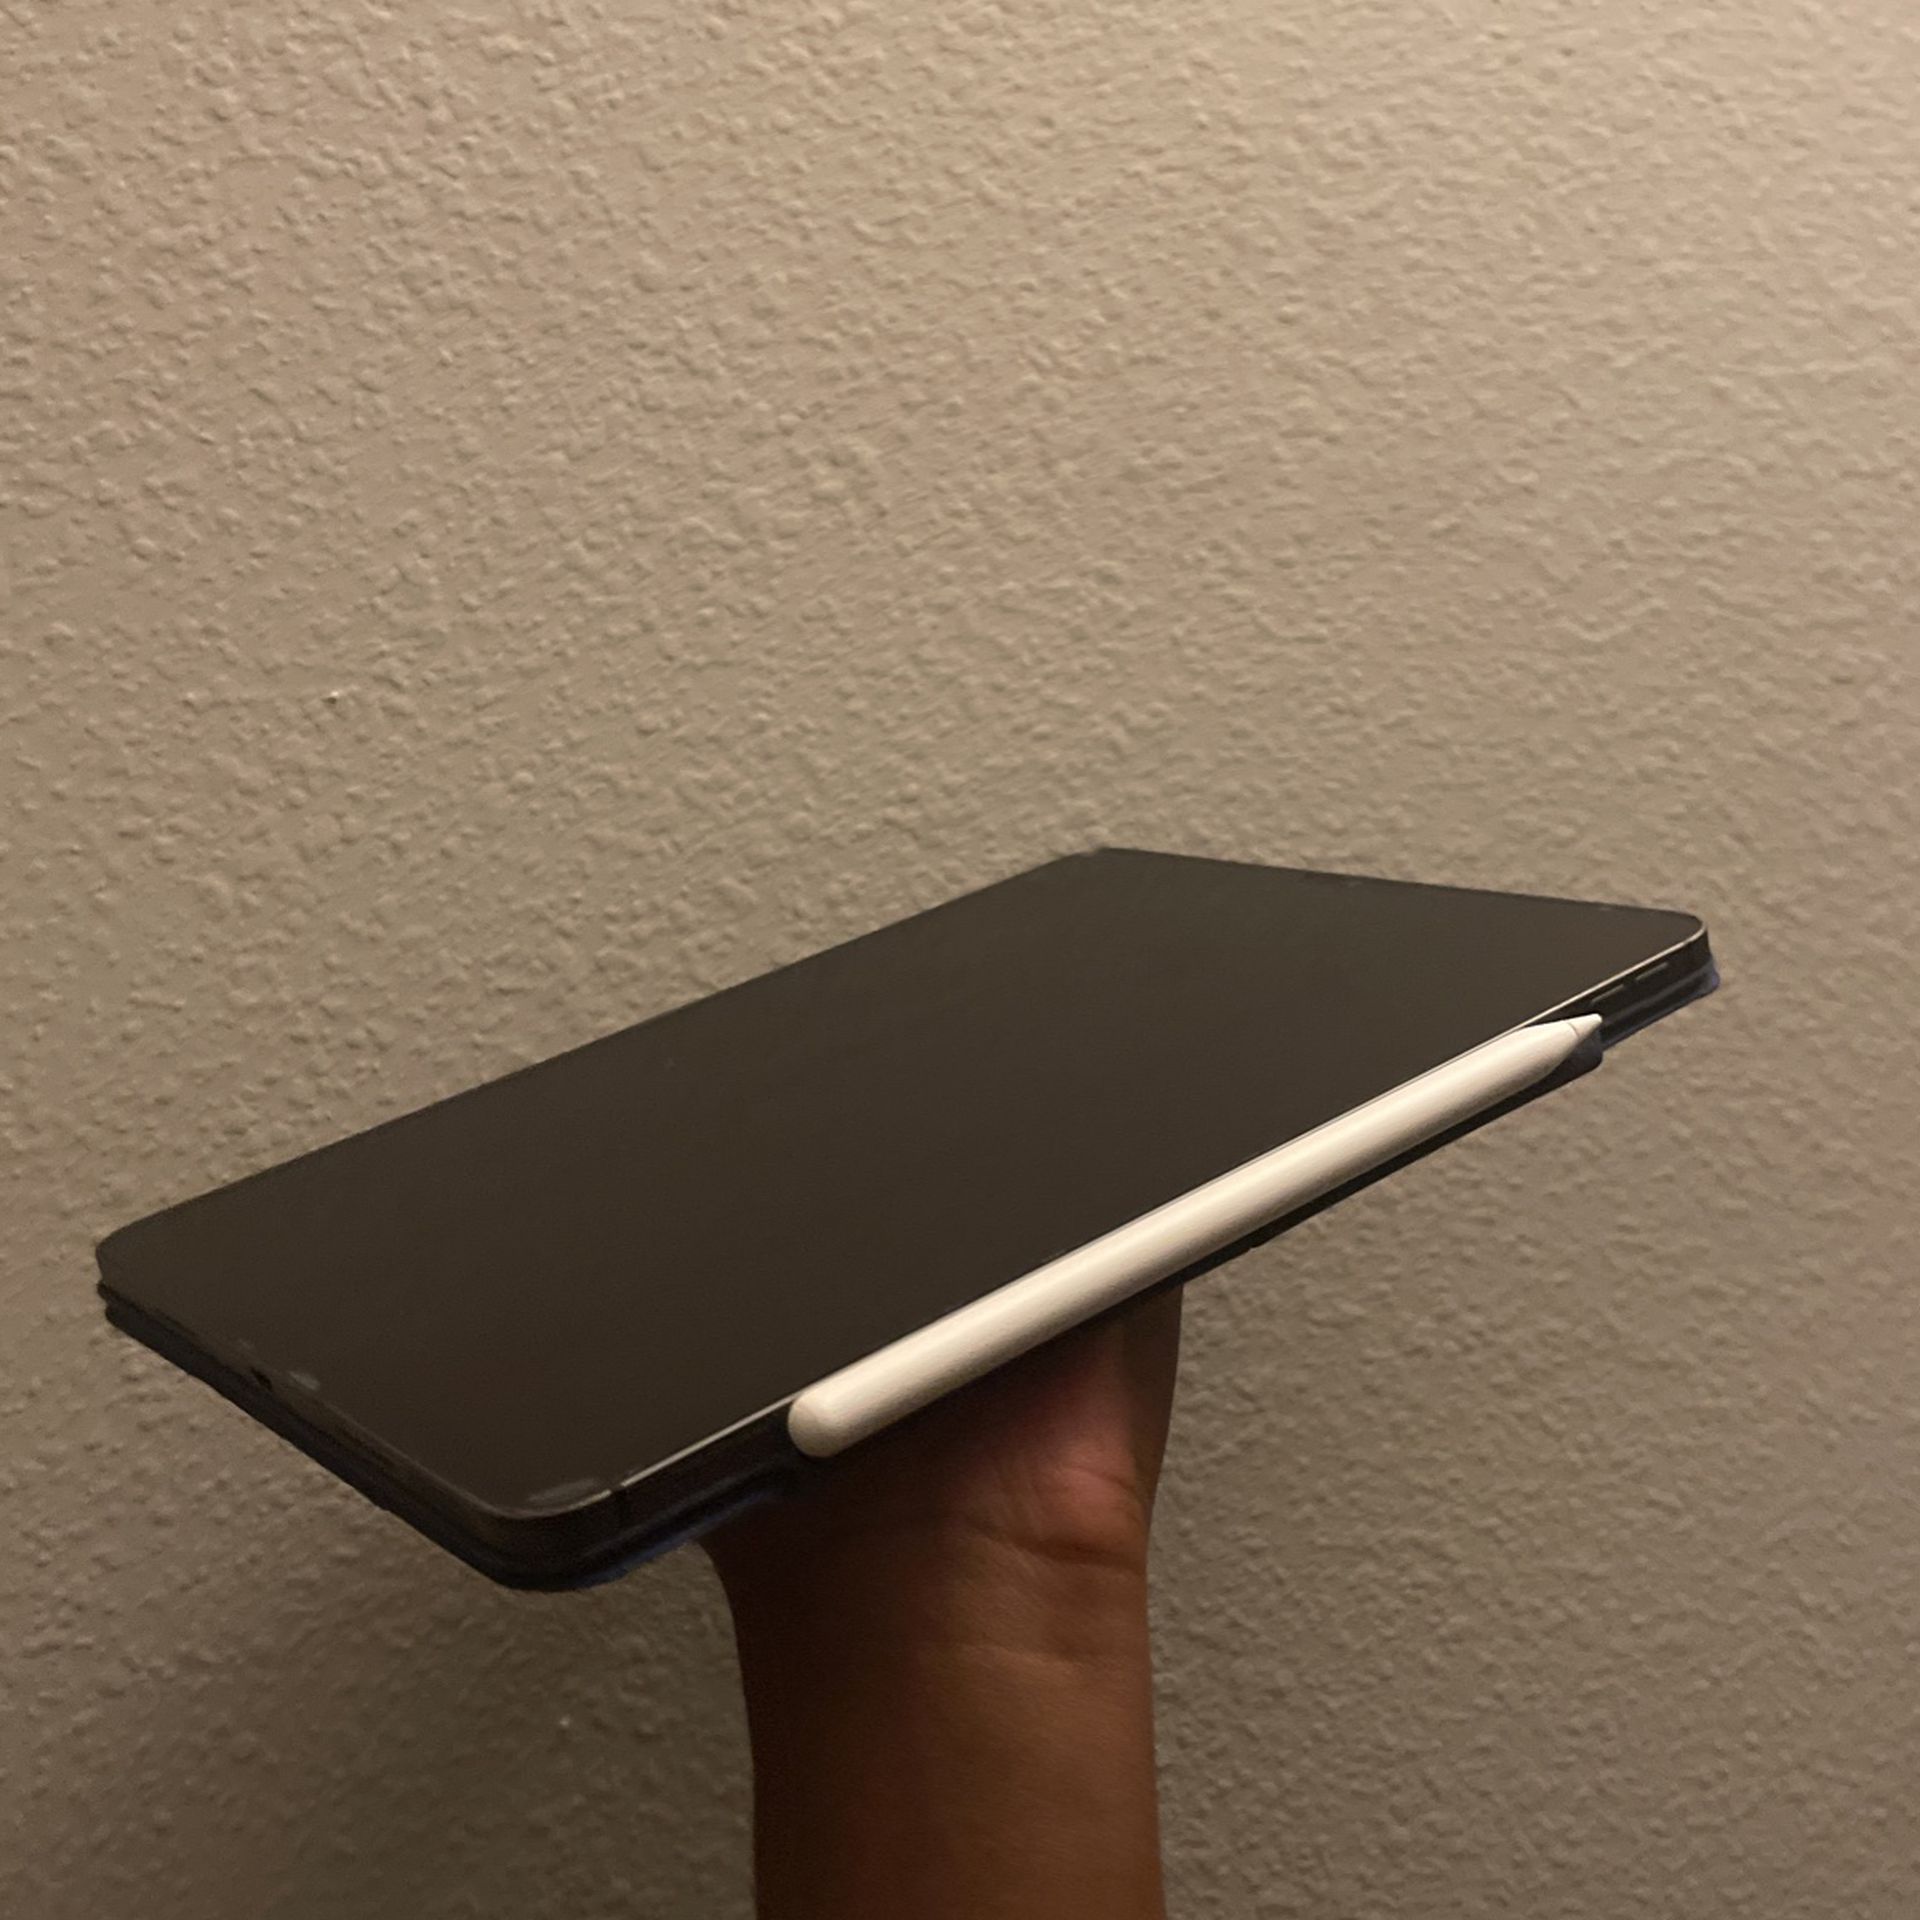 11-inch iPad Pro space gray